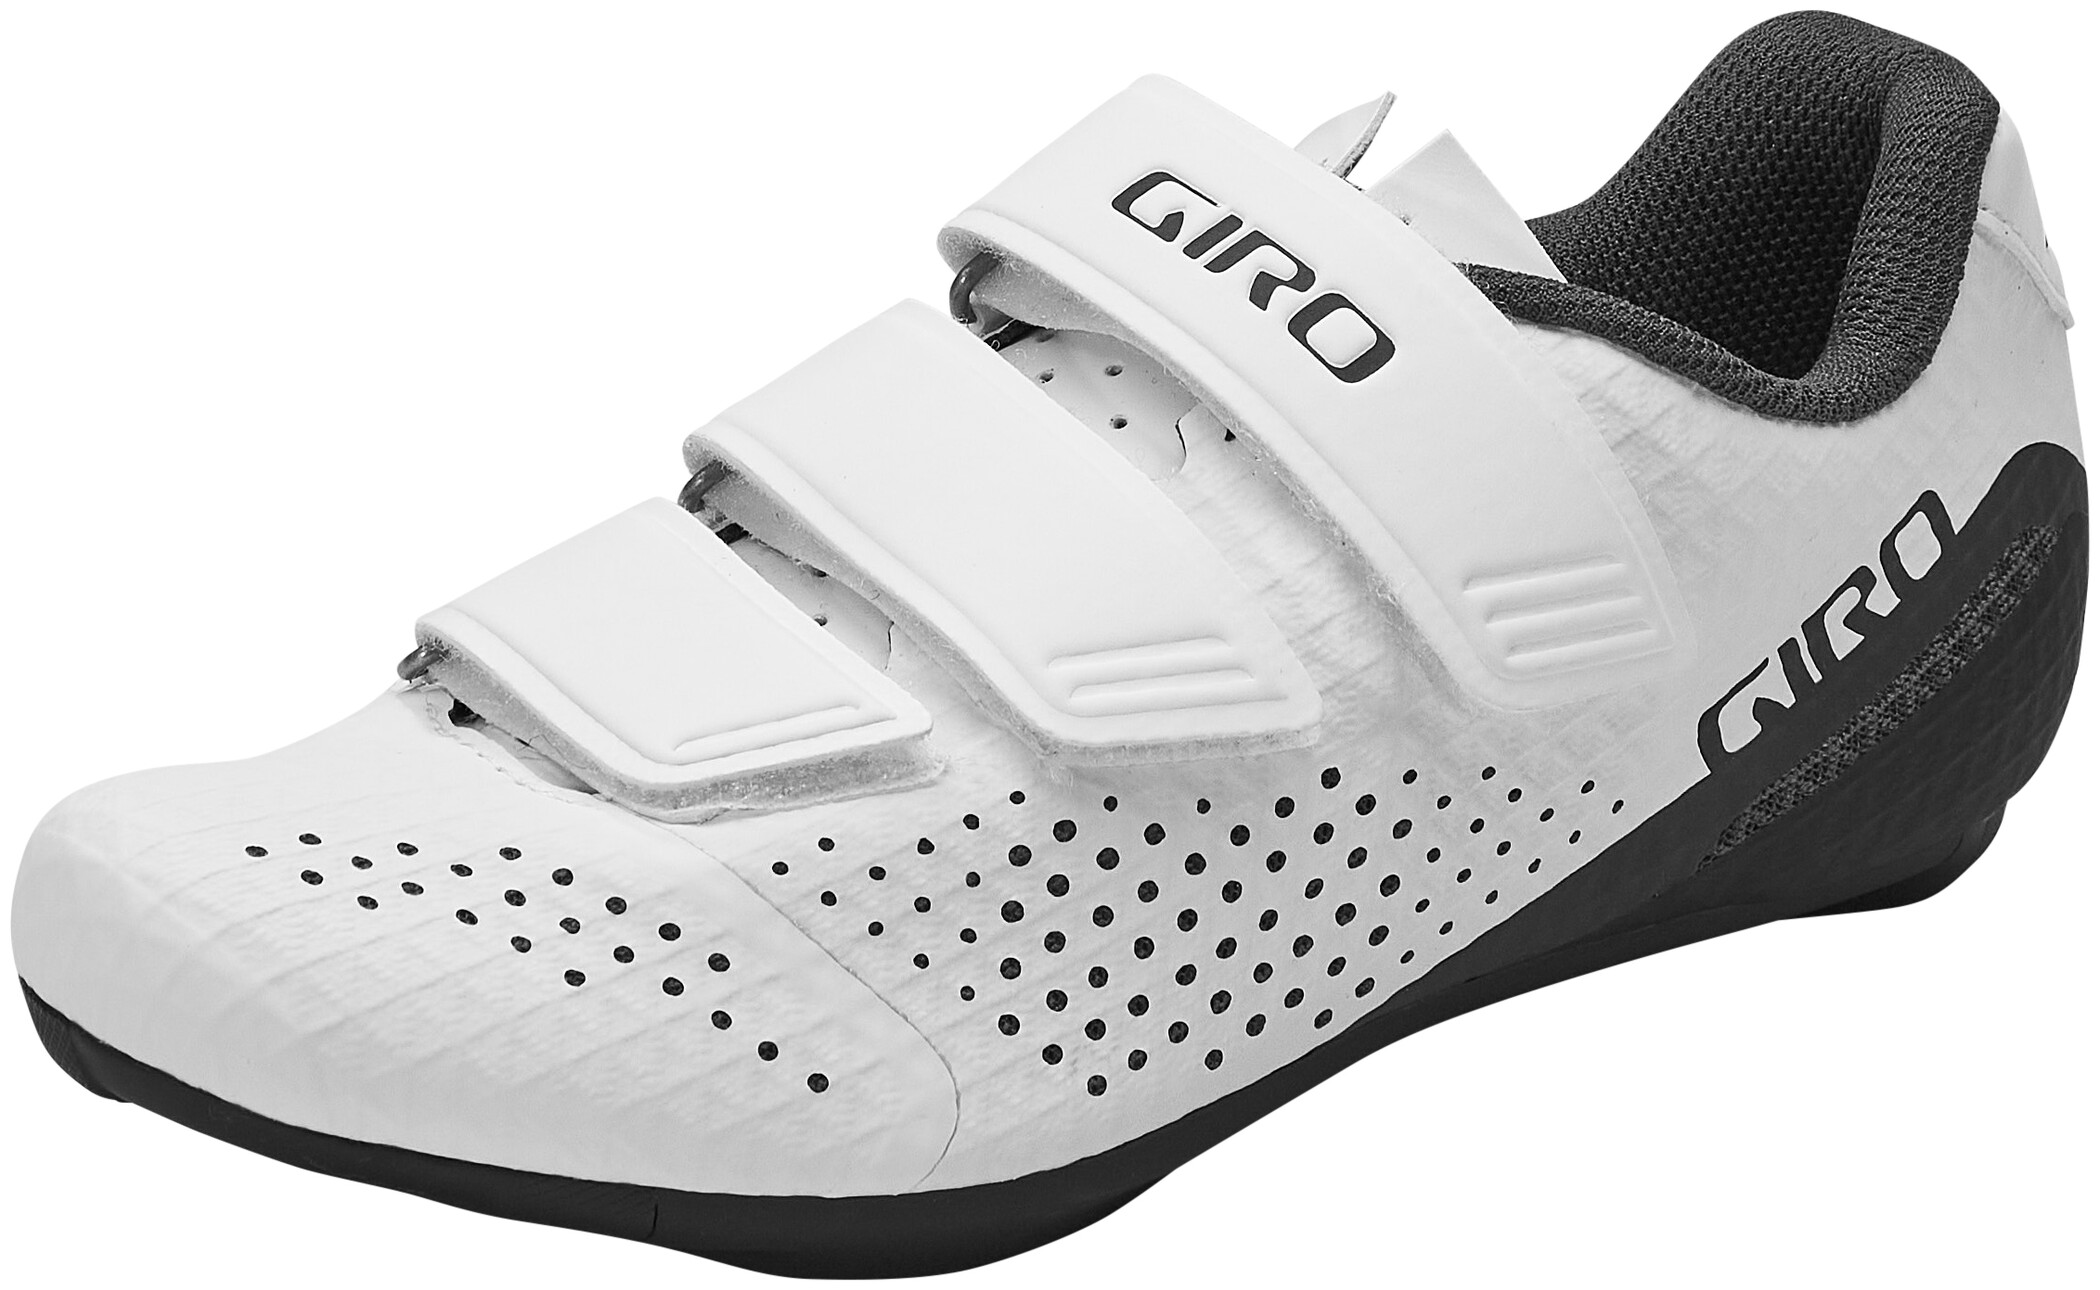 Giro Rev Damen Rennrad Fahrrad Schuhe grau 2019 